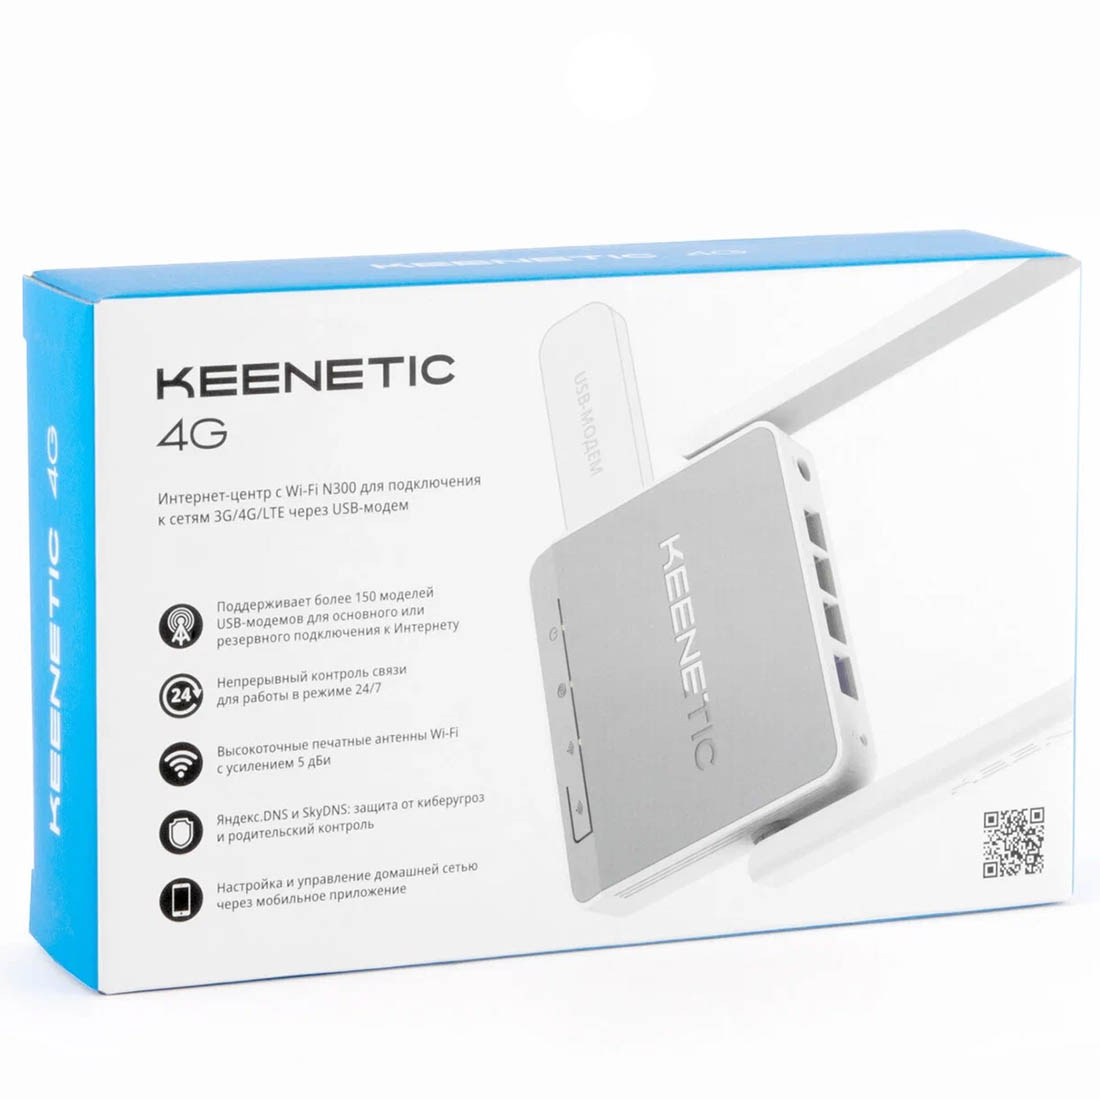 4G модем, Wi-Fi роутер, маршрутизатор KEENETIC KN-1212, цвет белый